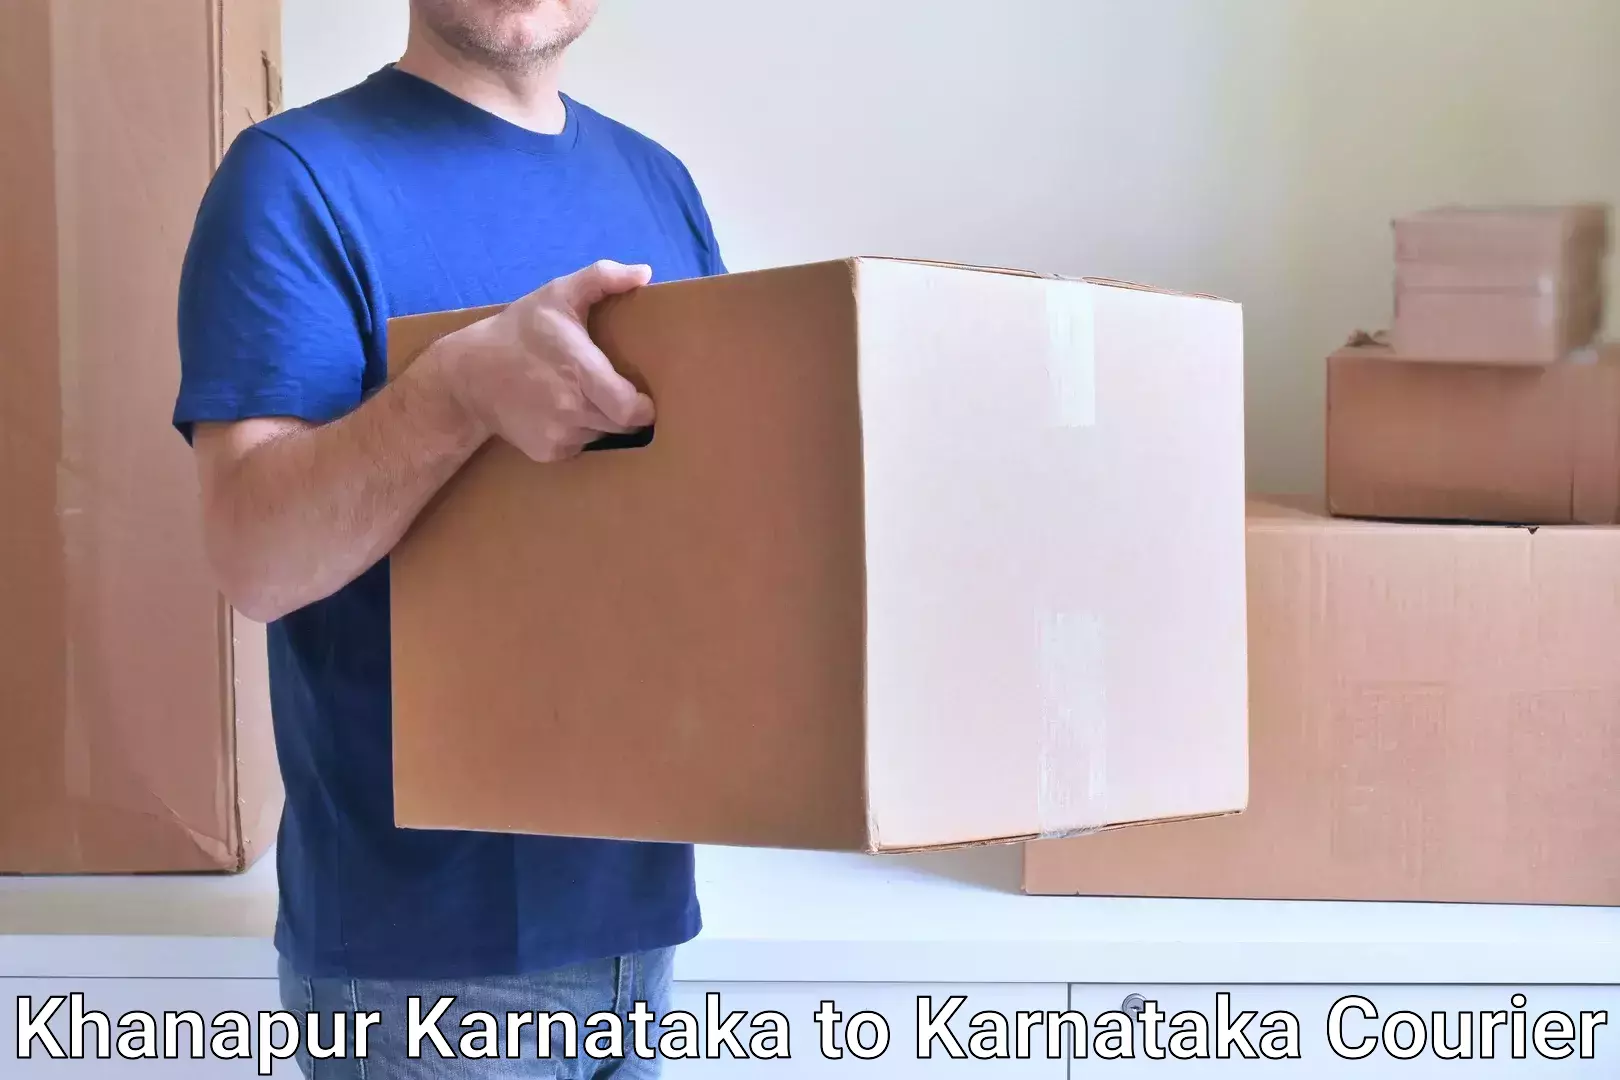 Reliable parcel services in Khanapur Karnataka to Alnavar